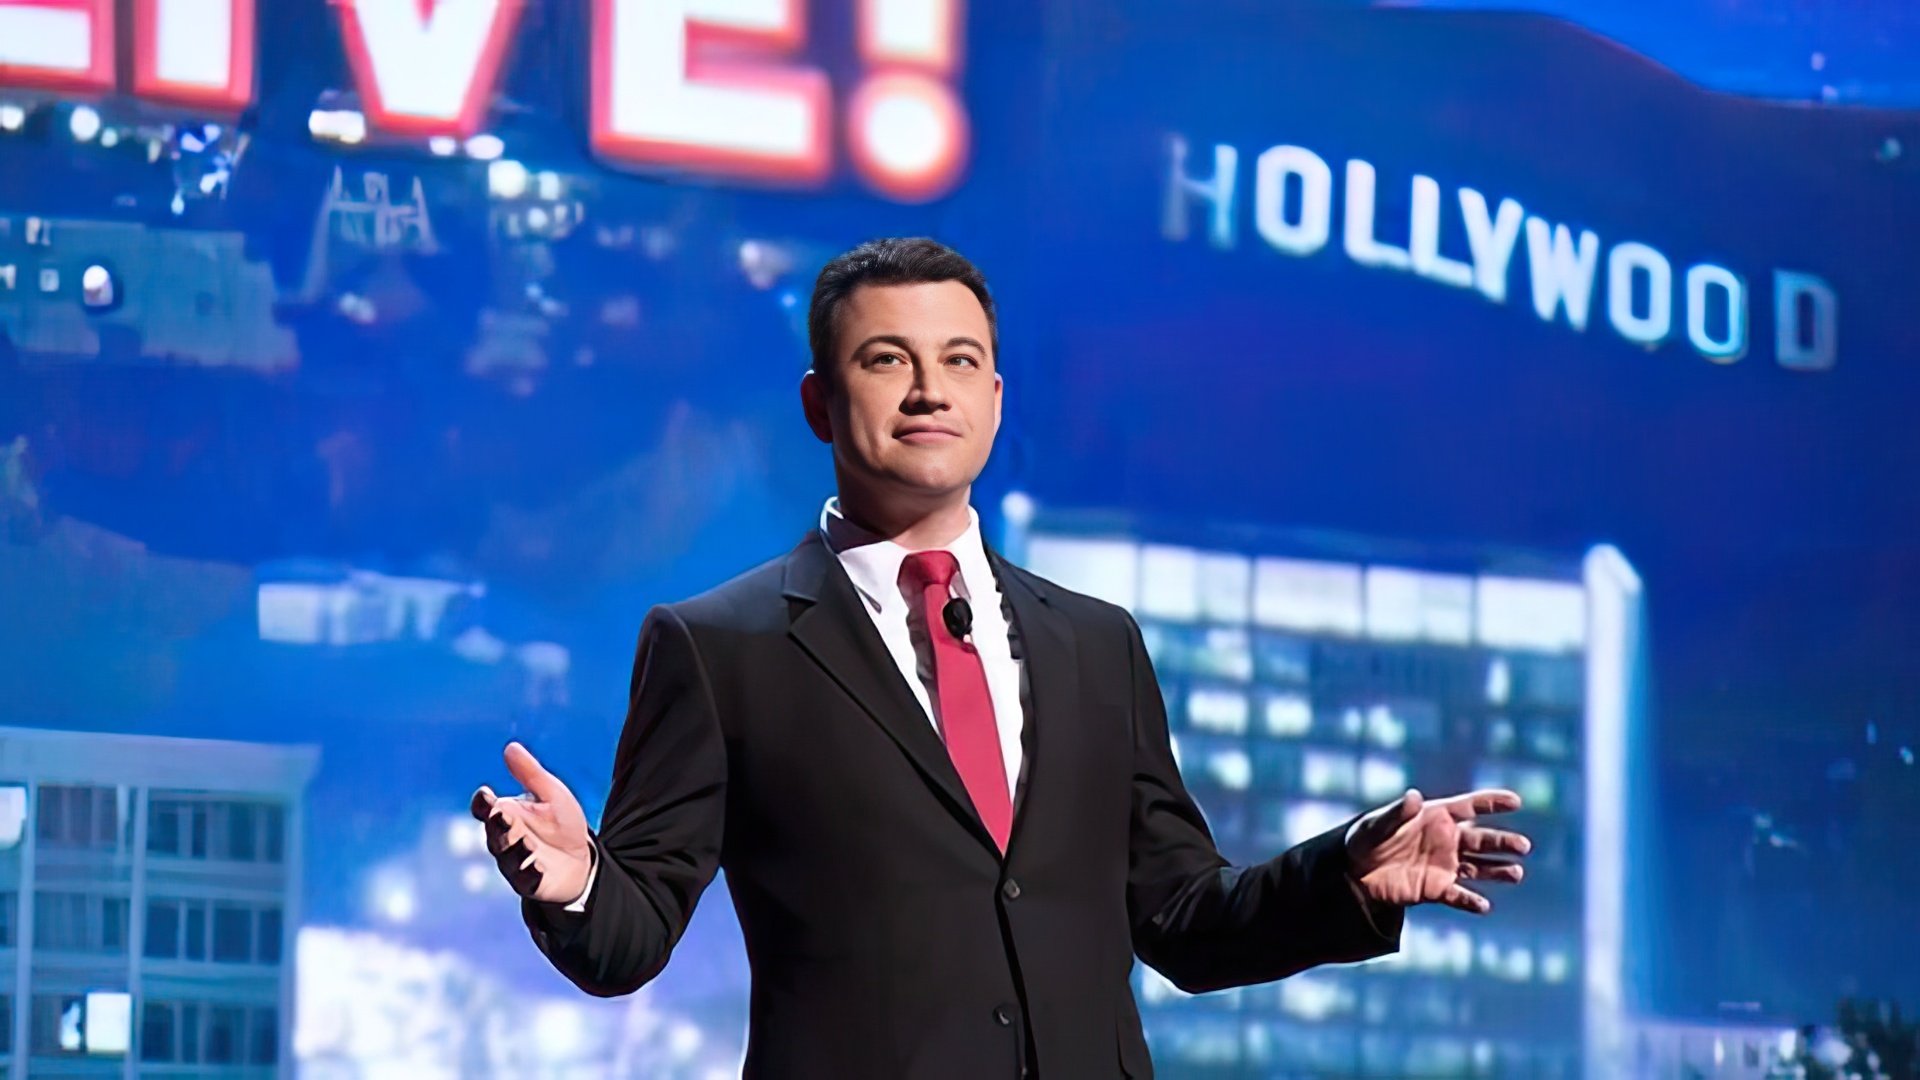 Jimmy Kimmel on his own TV talk show Jimmy Kimmel Live!